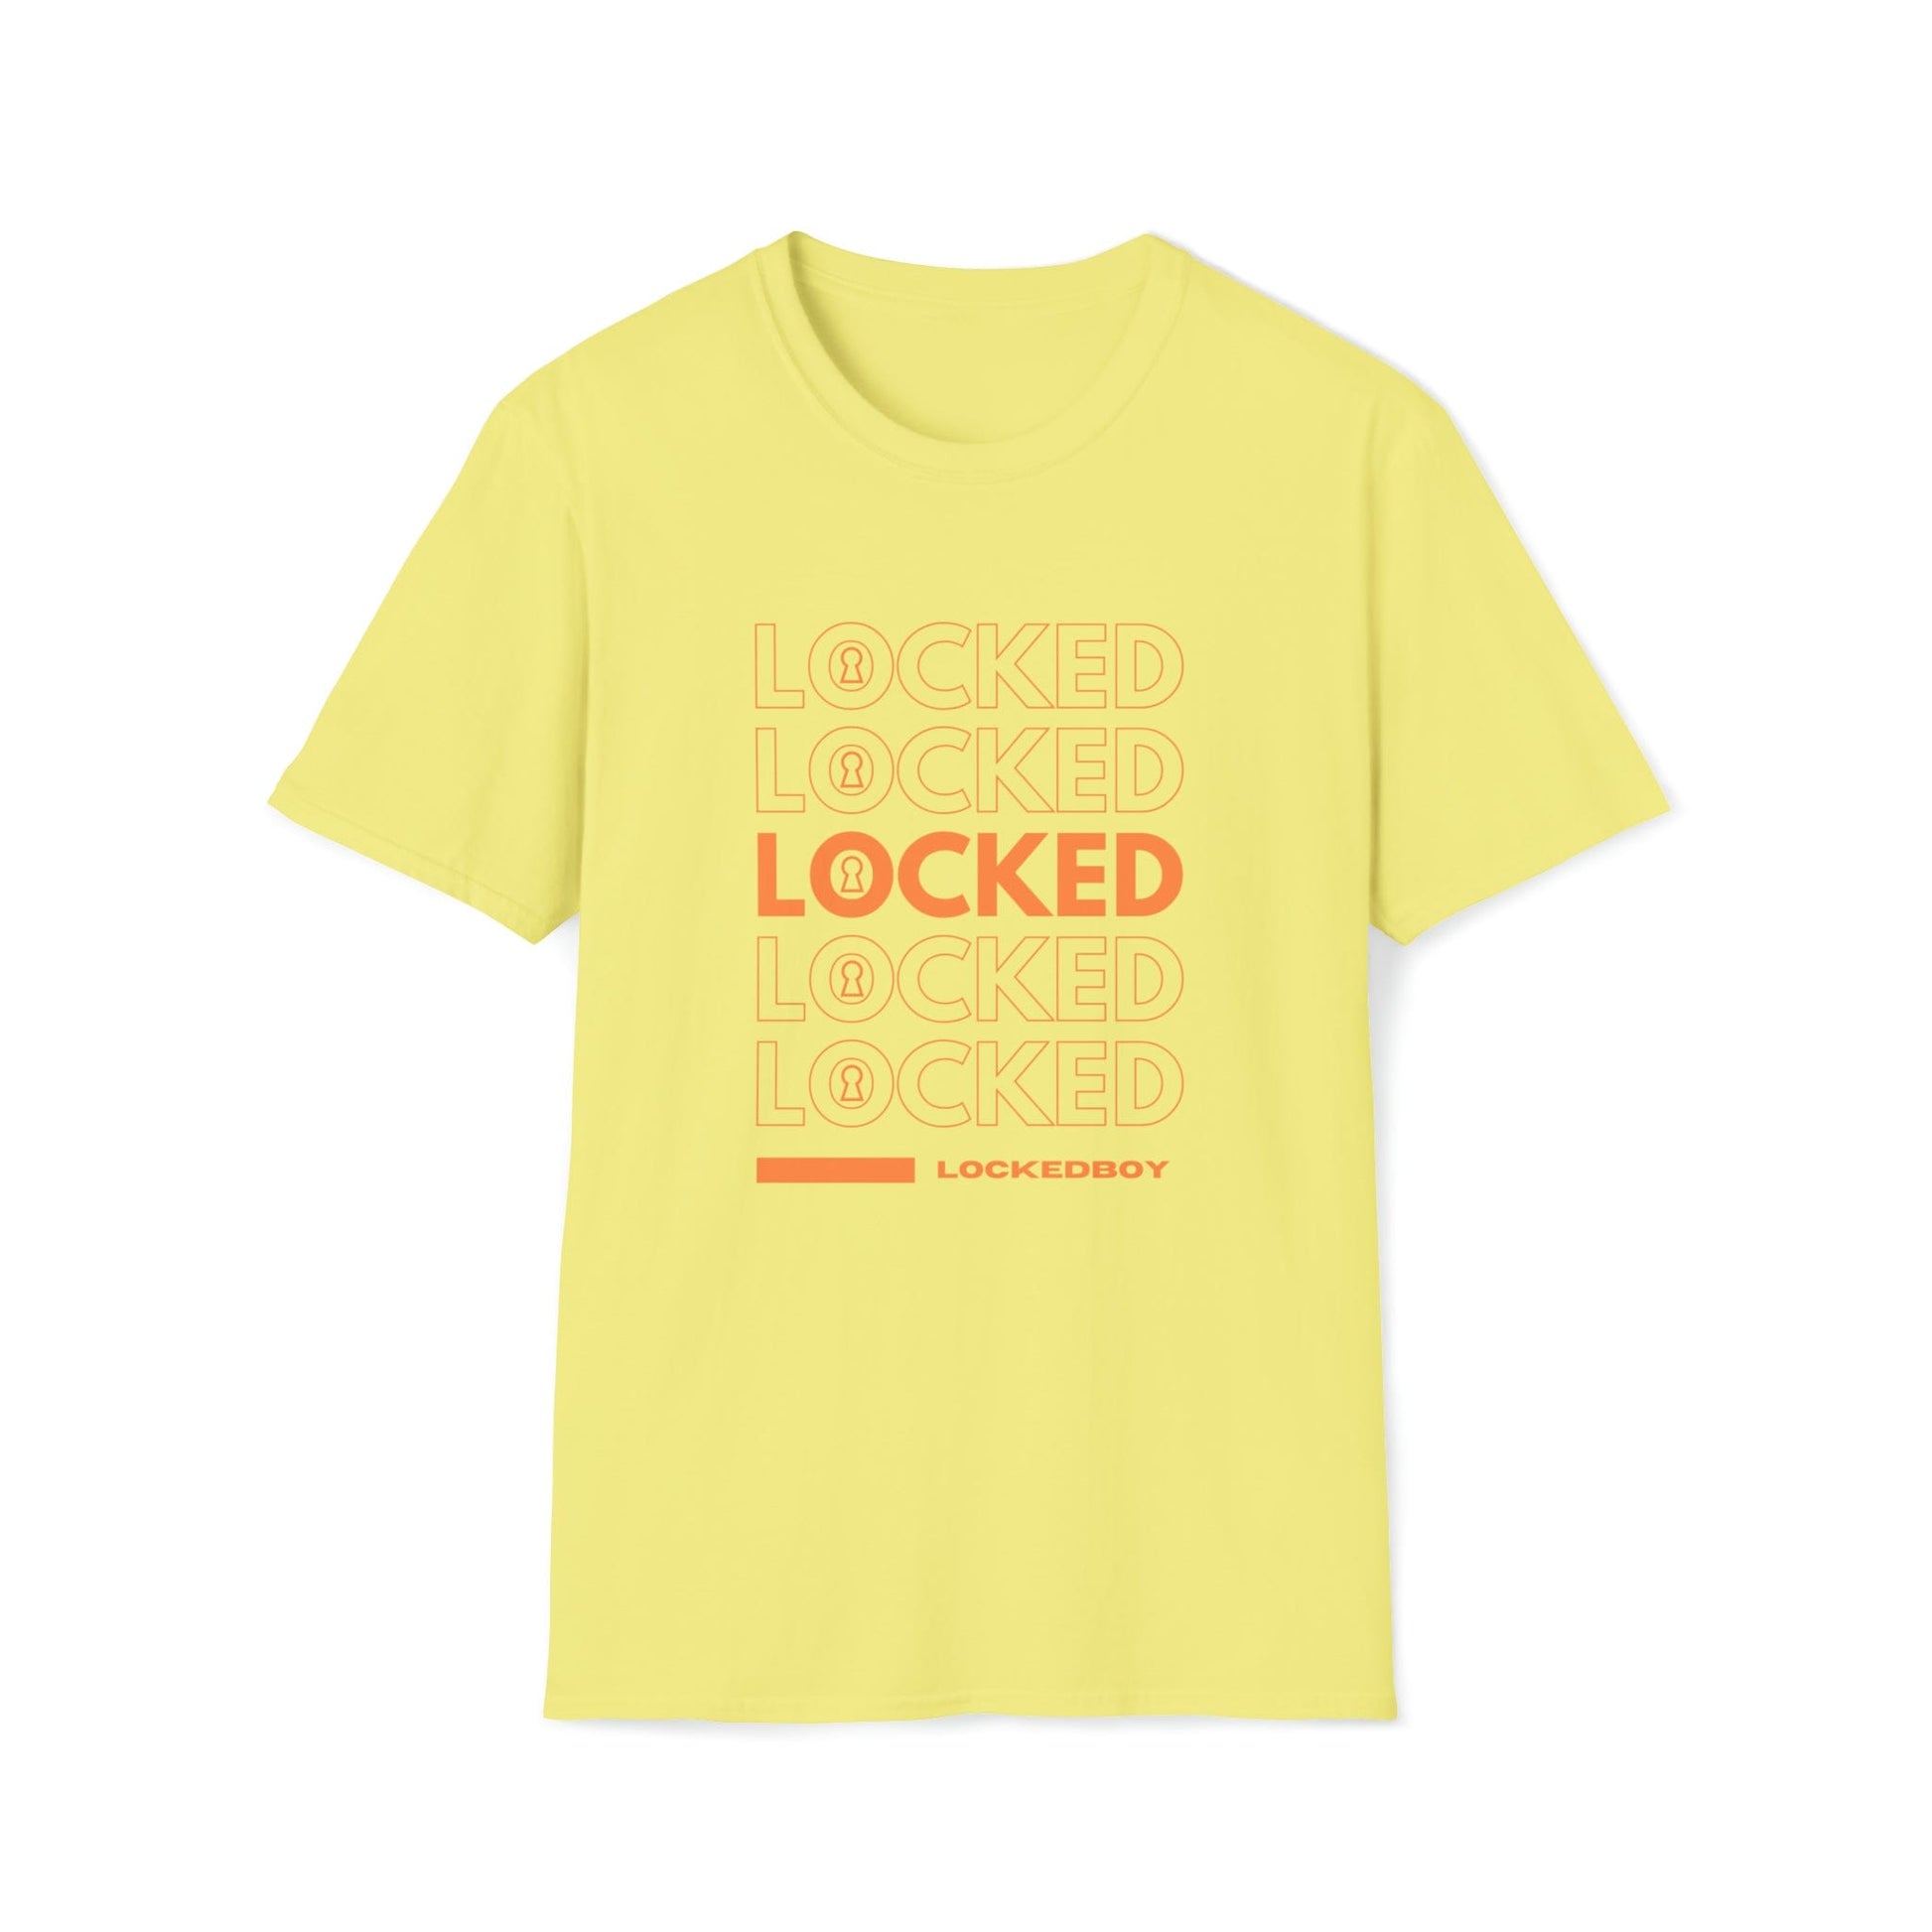 T-Shirt Cornsilk / S LOCKED Bag Inspo - Lockedboy Athletics Chastity Tshirt LEATHERDADDY BATOR